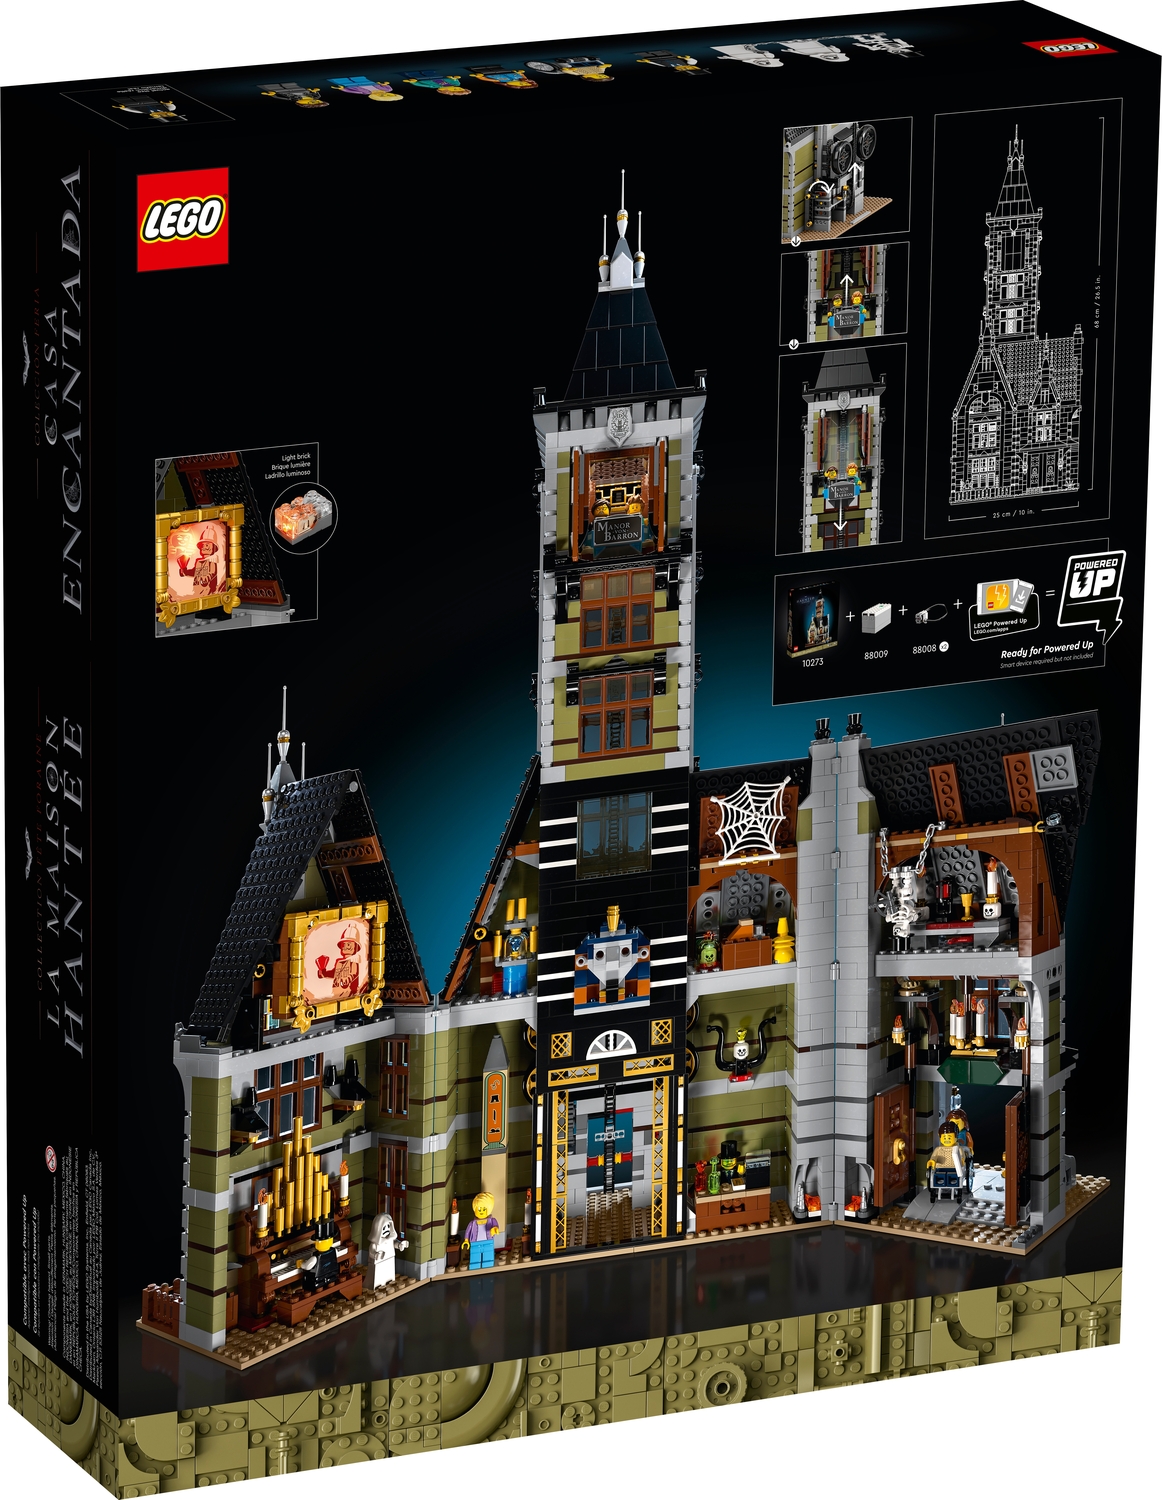 LEGO® Creator Expert: Haunted House - Imagination Toys